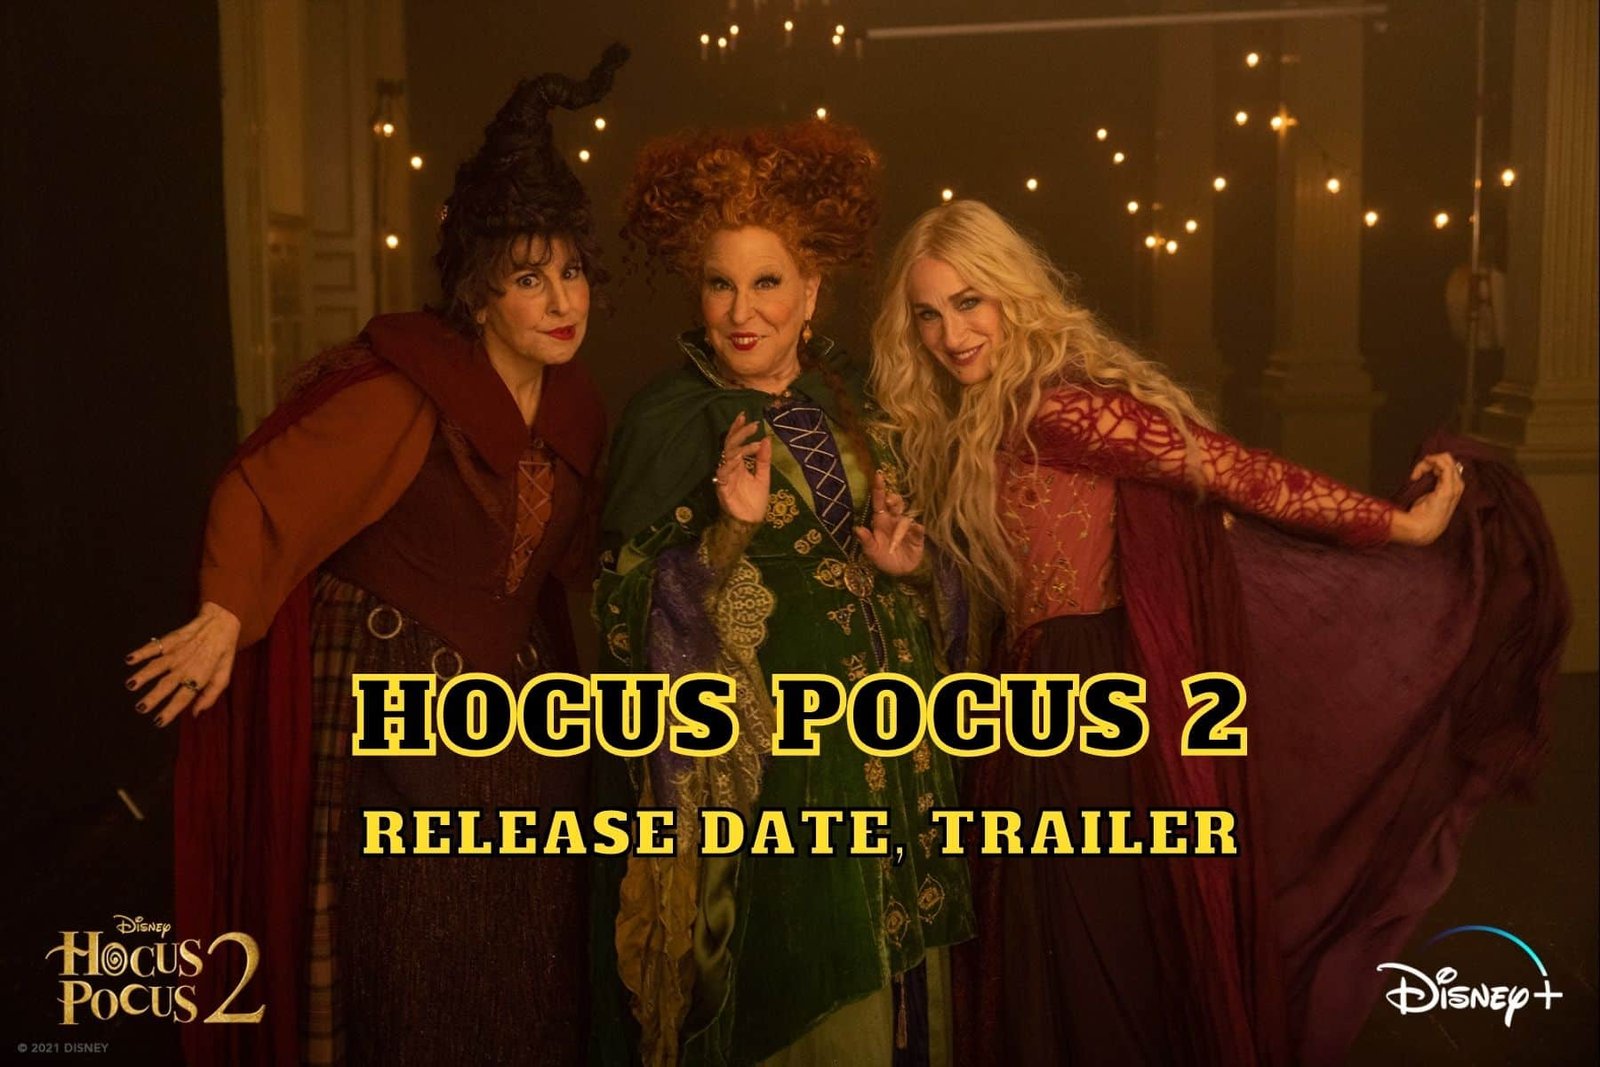 Hocus Pocus 2 Release Date, Trailer - Is It Canceled?